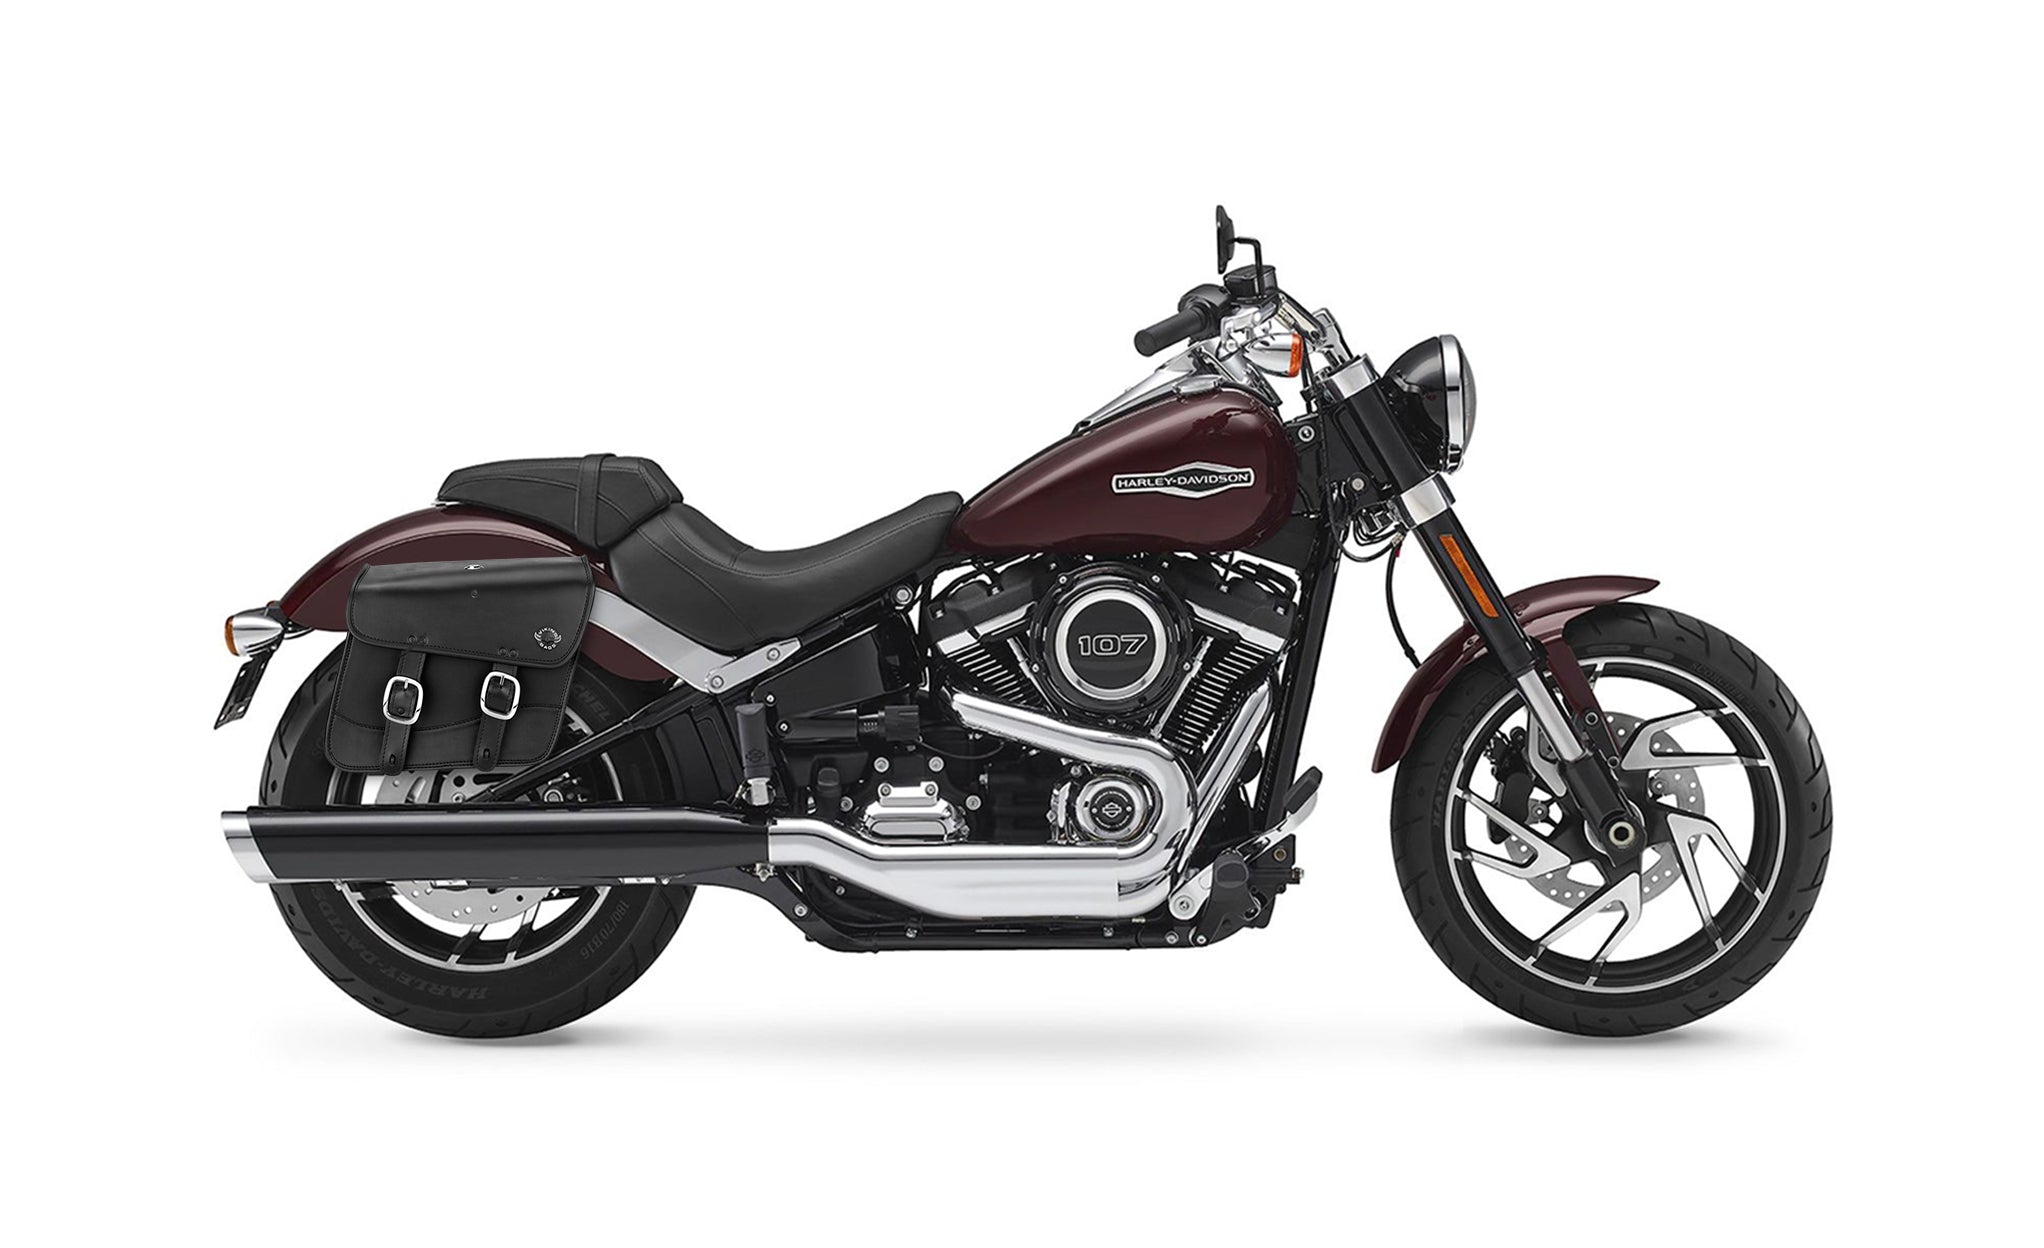 Viking Thor Medium Leather Motorcycle Saddlebags For Harley Davidson Softail Sport Glide Flsb on Bike Photo @expand